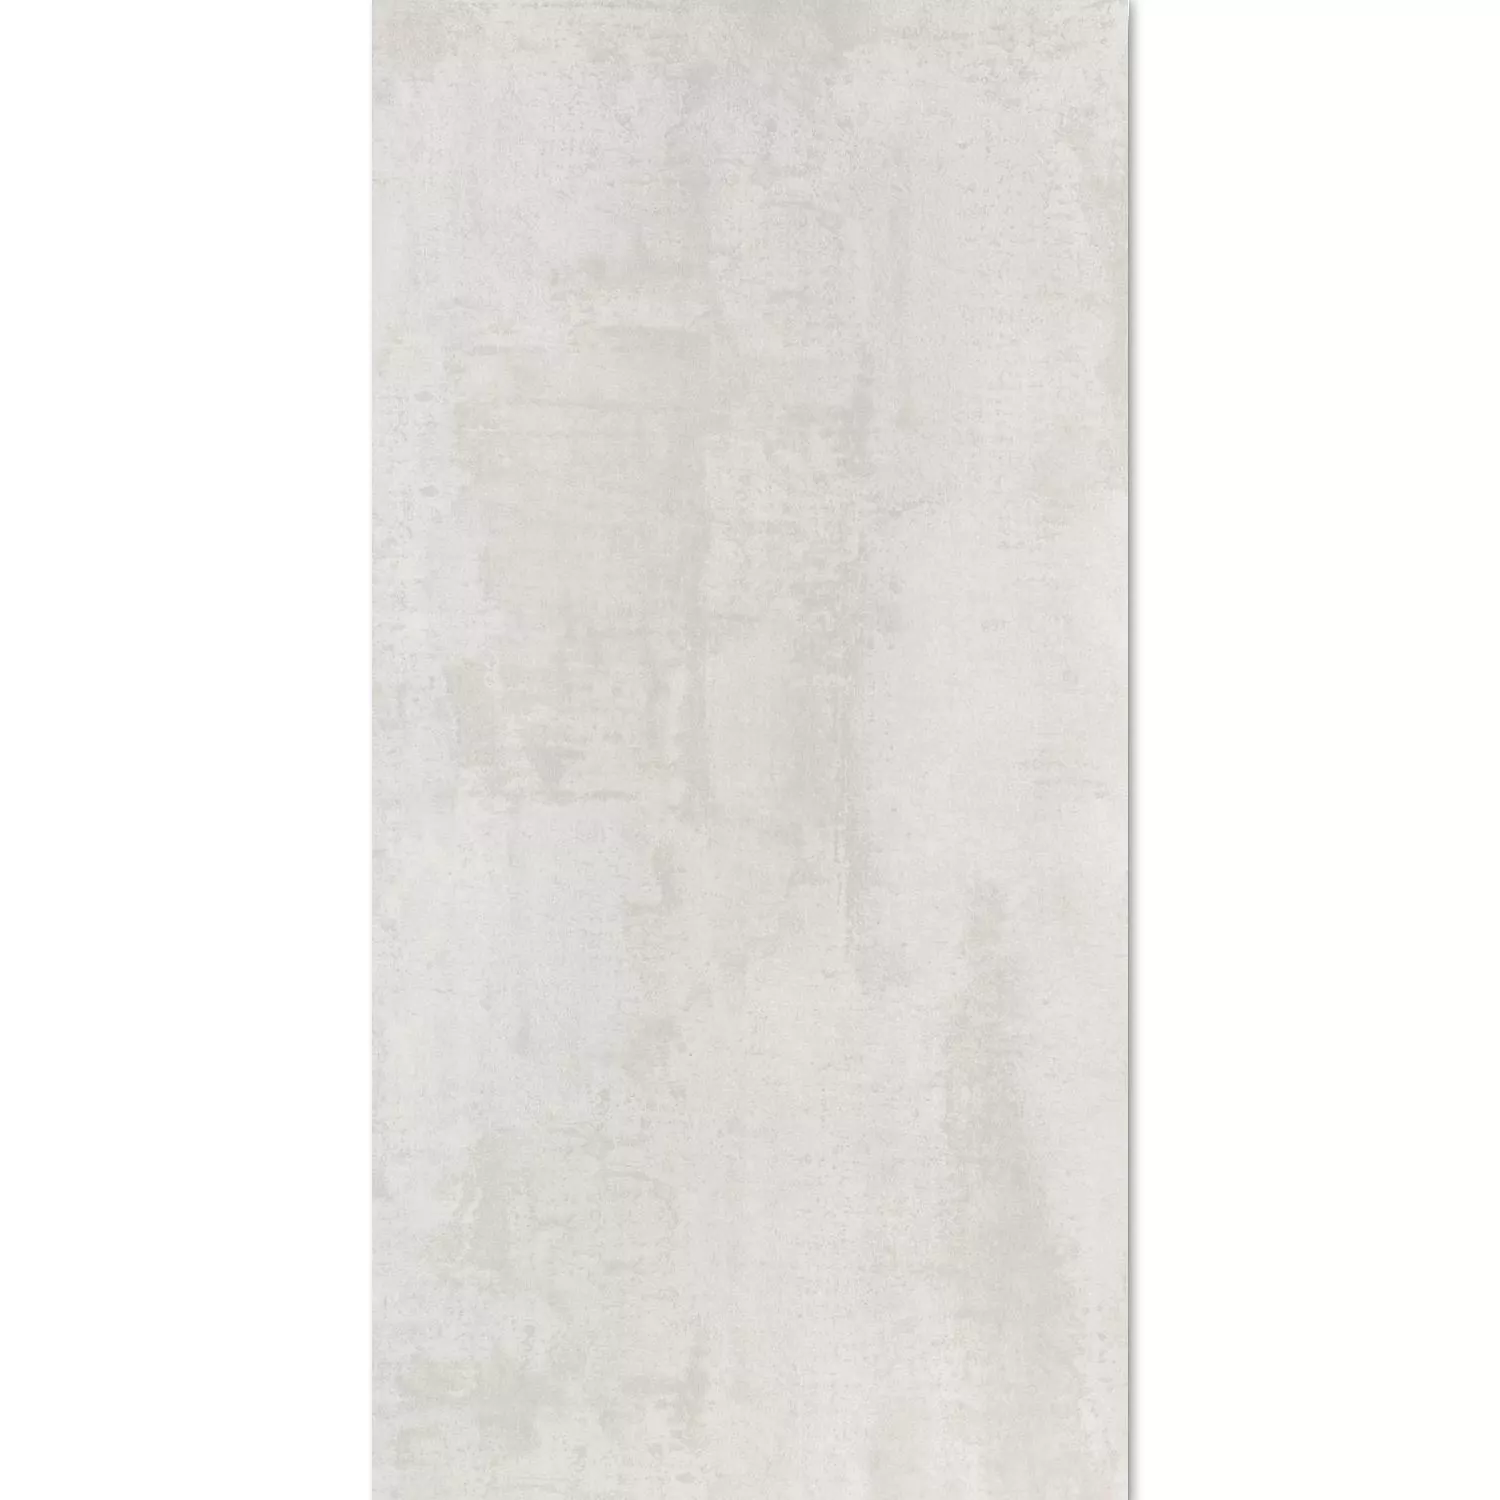 Gresie Herion Aspect Metalic Lappato Blanco 45x90cm